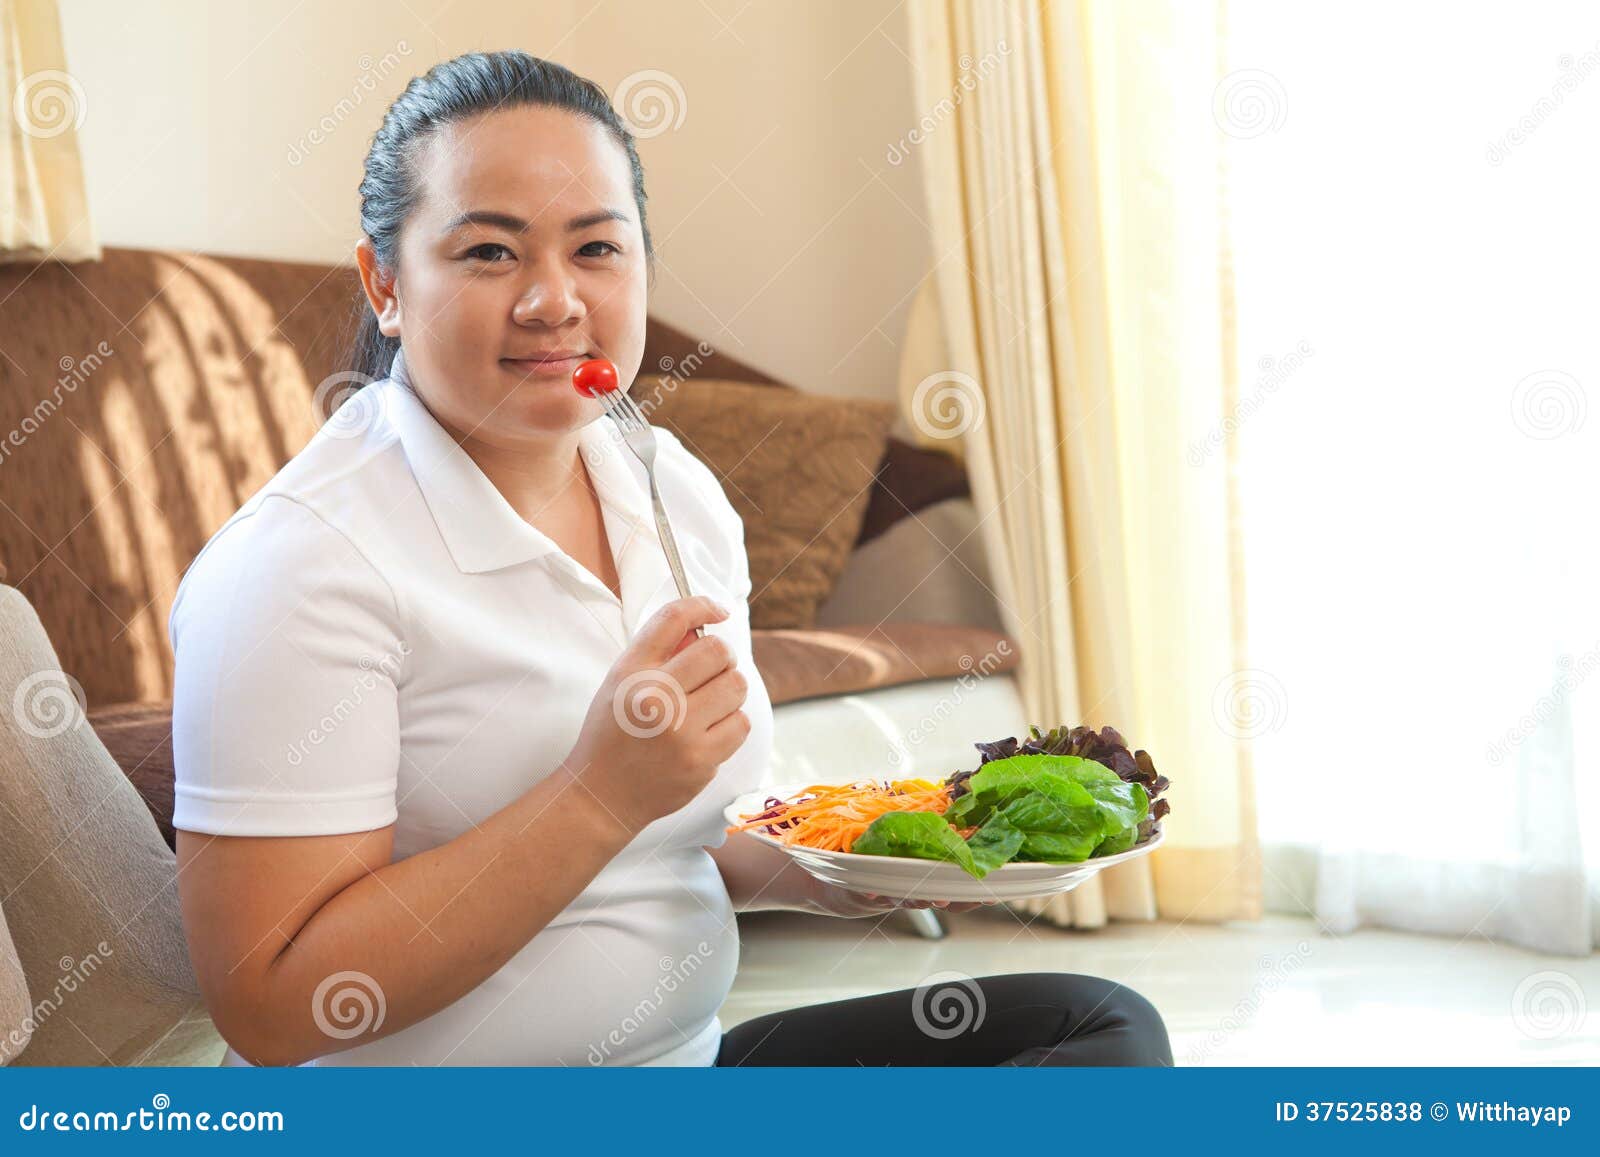 Asian Woman Eating 8